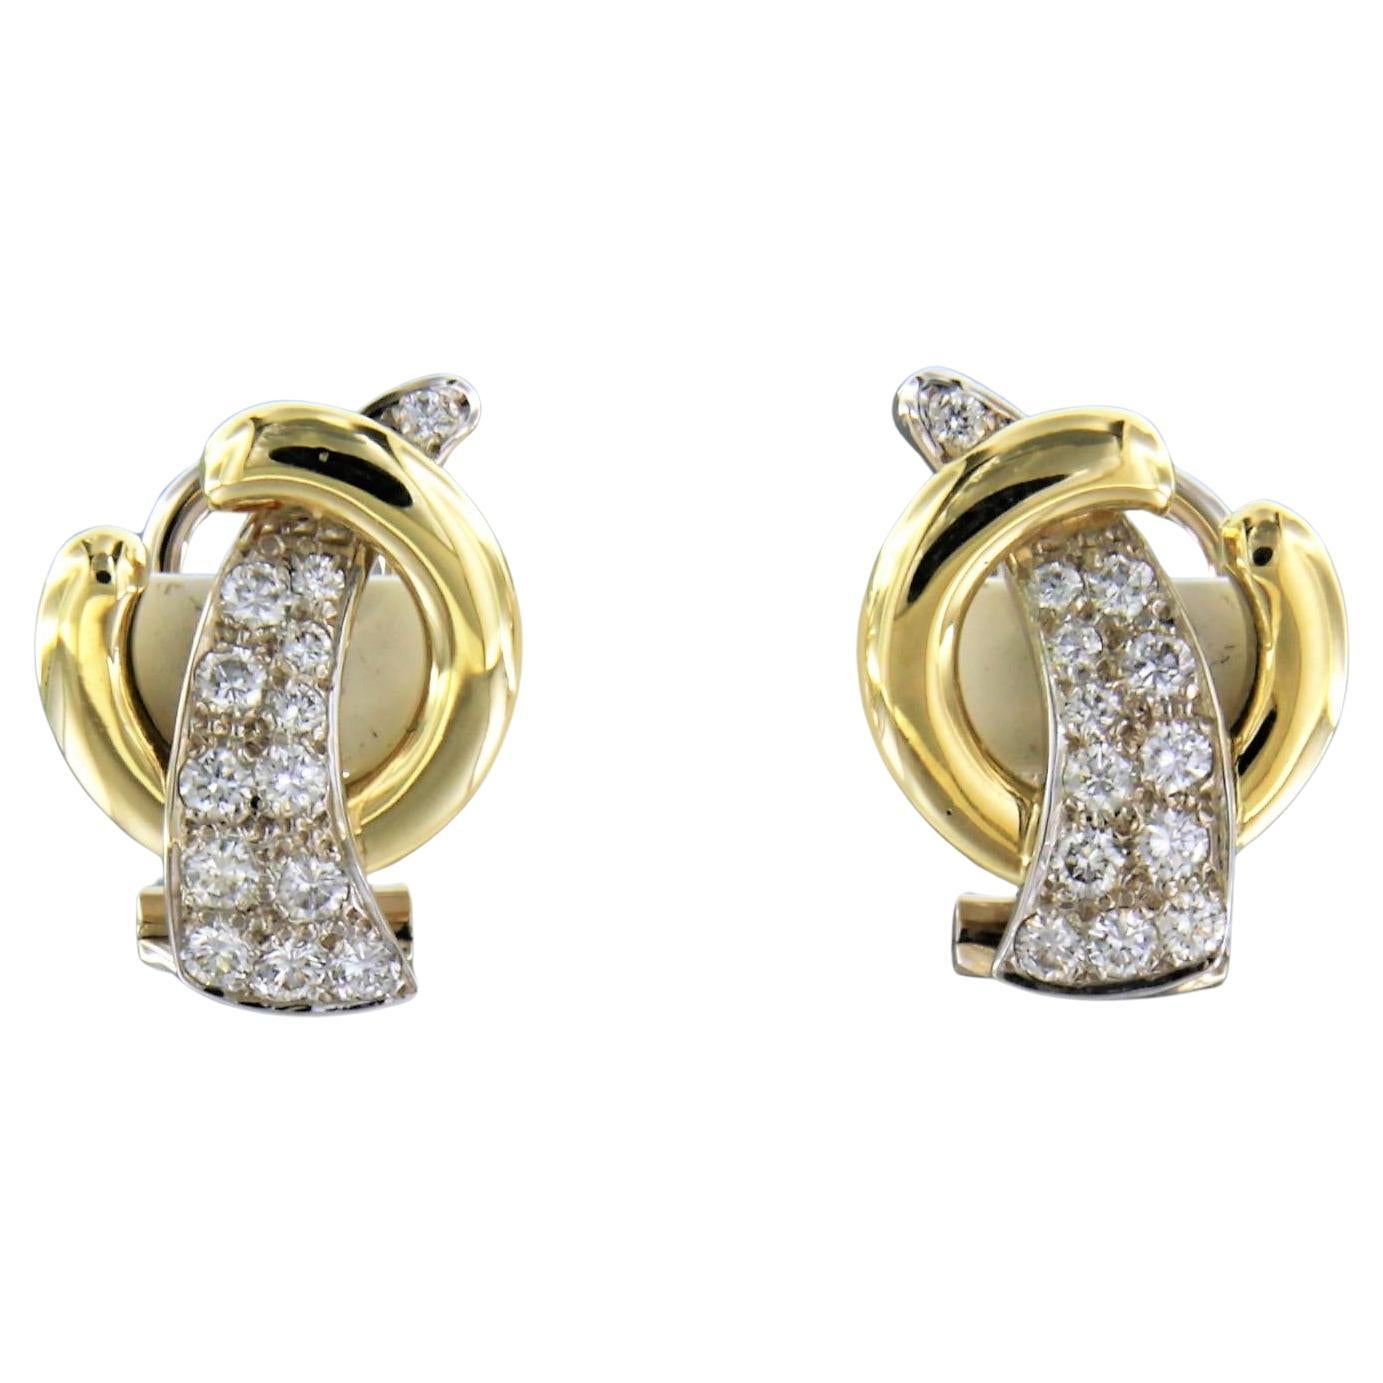 Ohrringe mit Diamanten besetzt 14kt Bicolor Gold